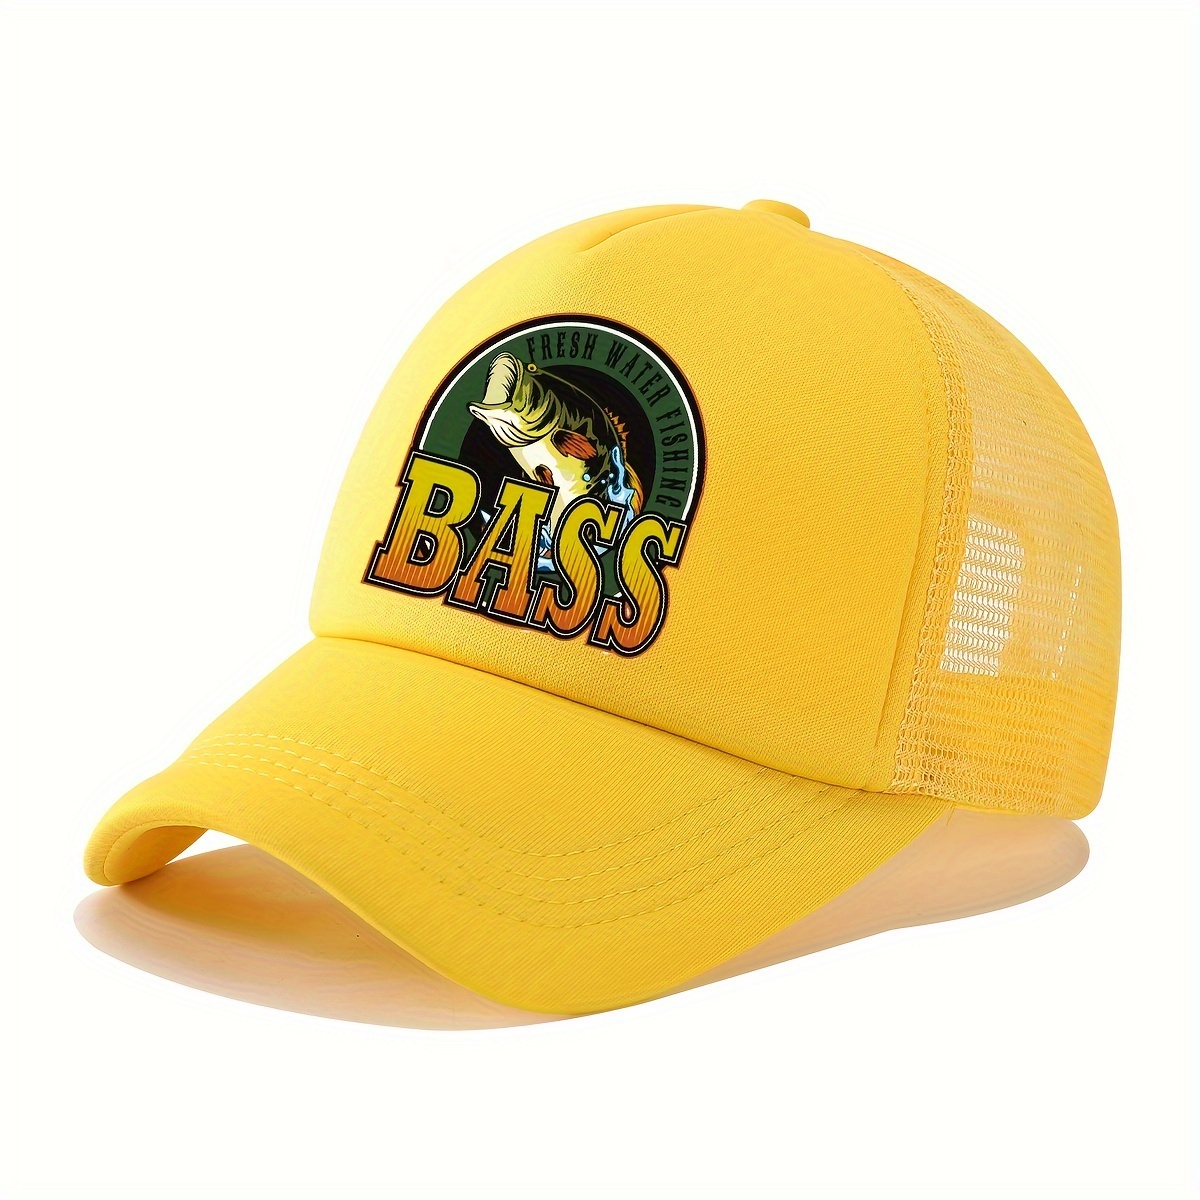 B.A.S.S Bass Fishing Cap Hat Khaki Beige Tan Adjustable Strap BASS